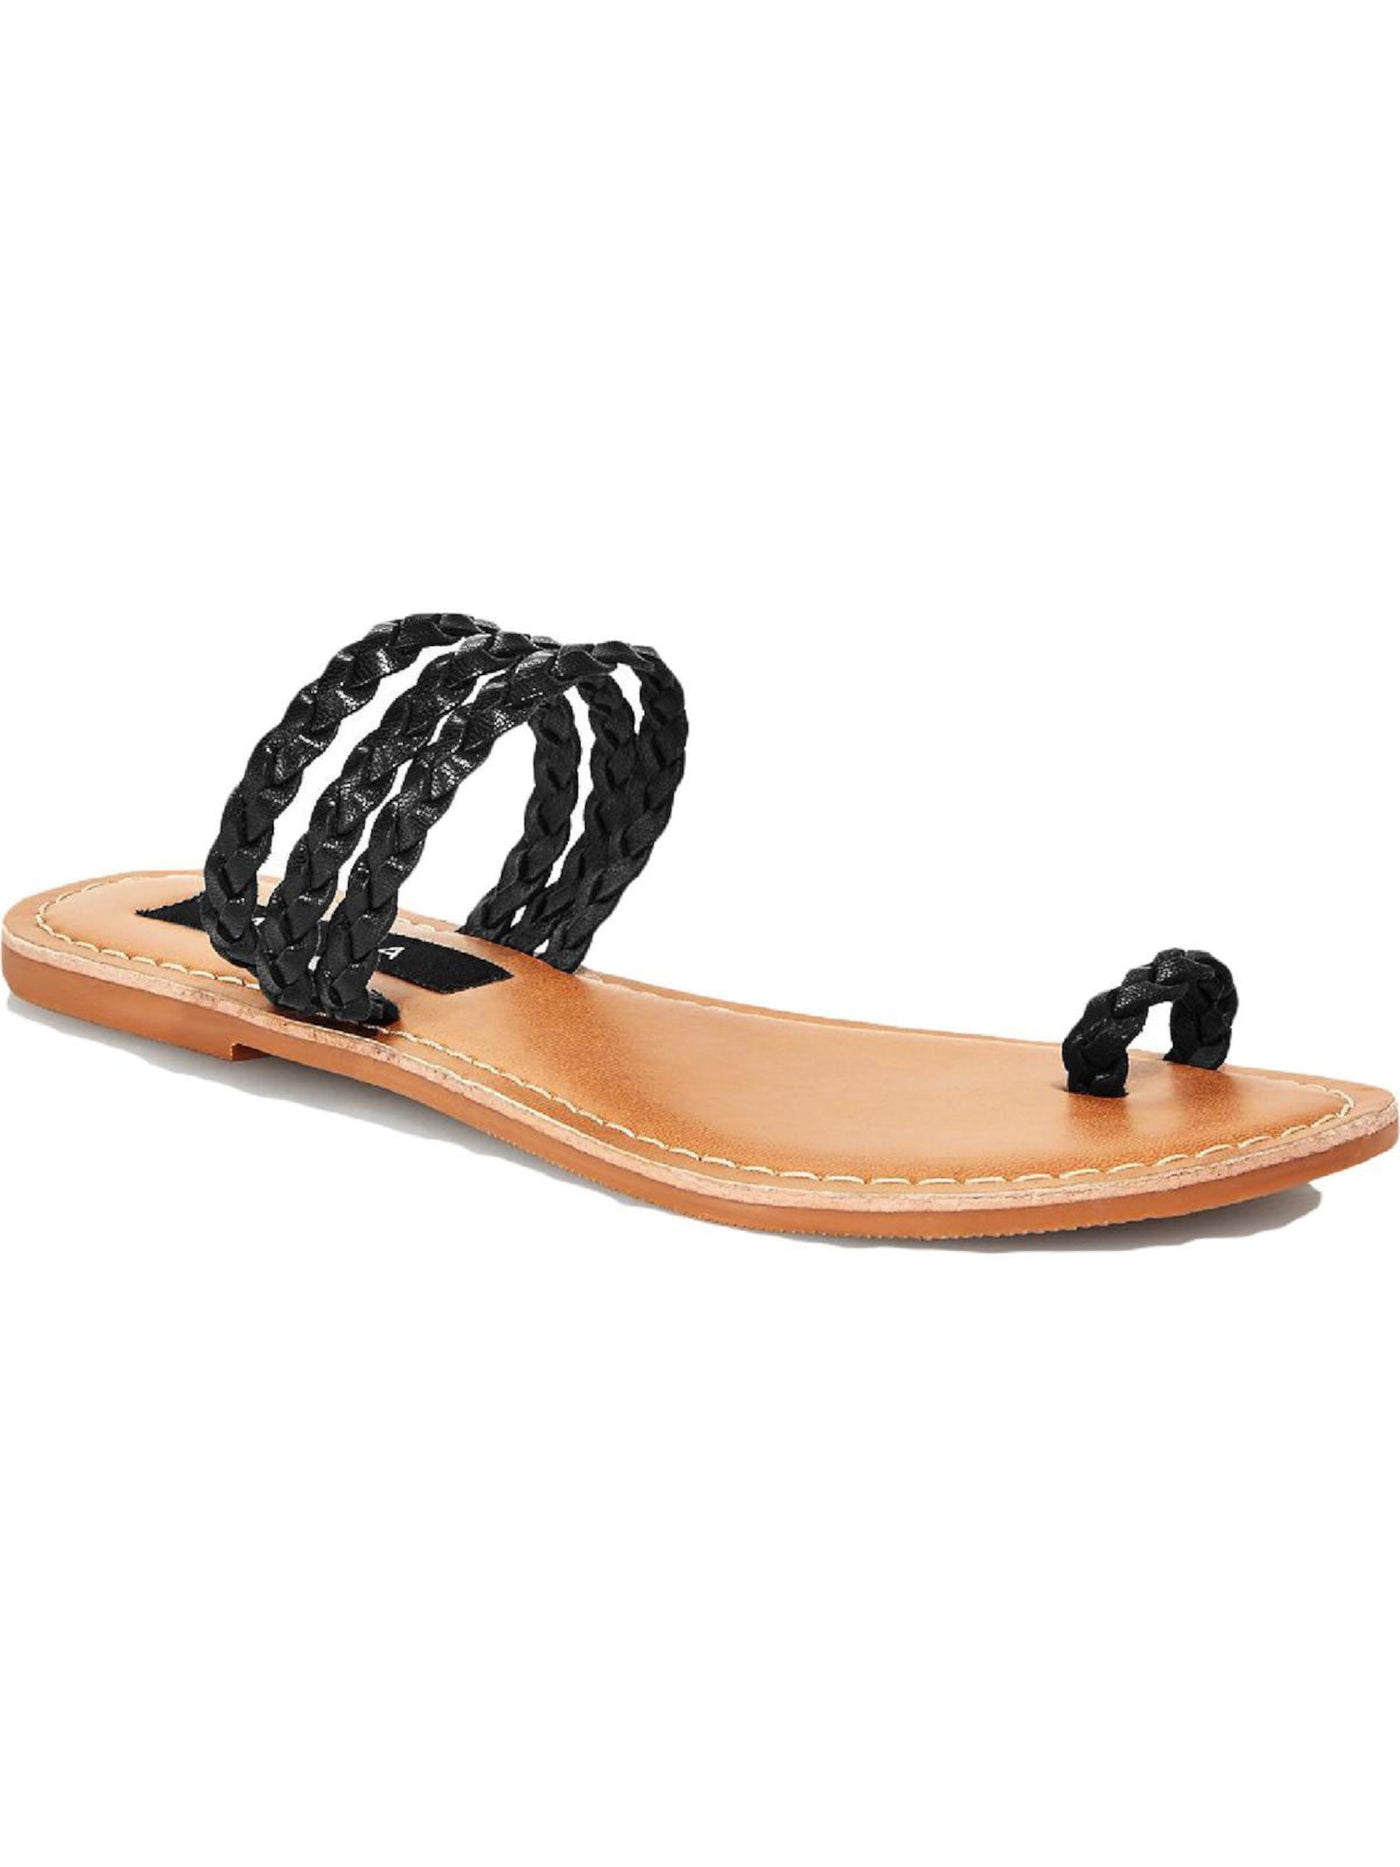 AQUA Womens Black Toe-Loop Cushioned Braided Slay Open Toe Slip On Leather Slide Sandals Shoes 6.5 M